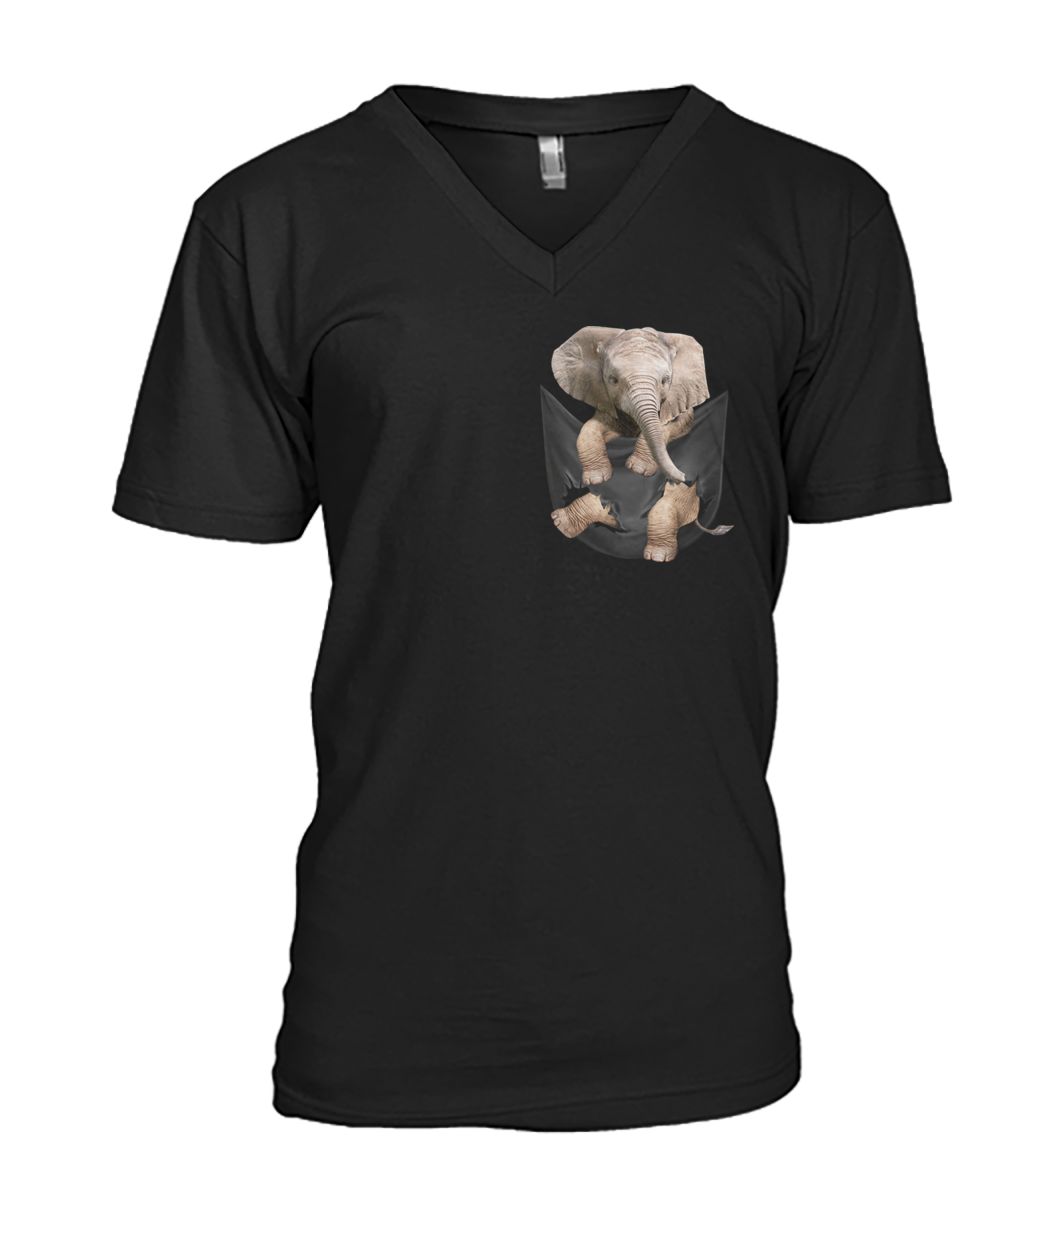 Elephant in pocket mens v-neck